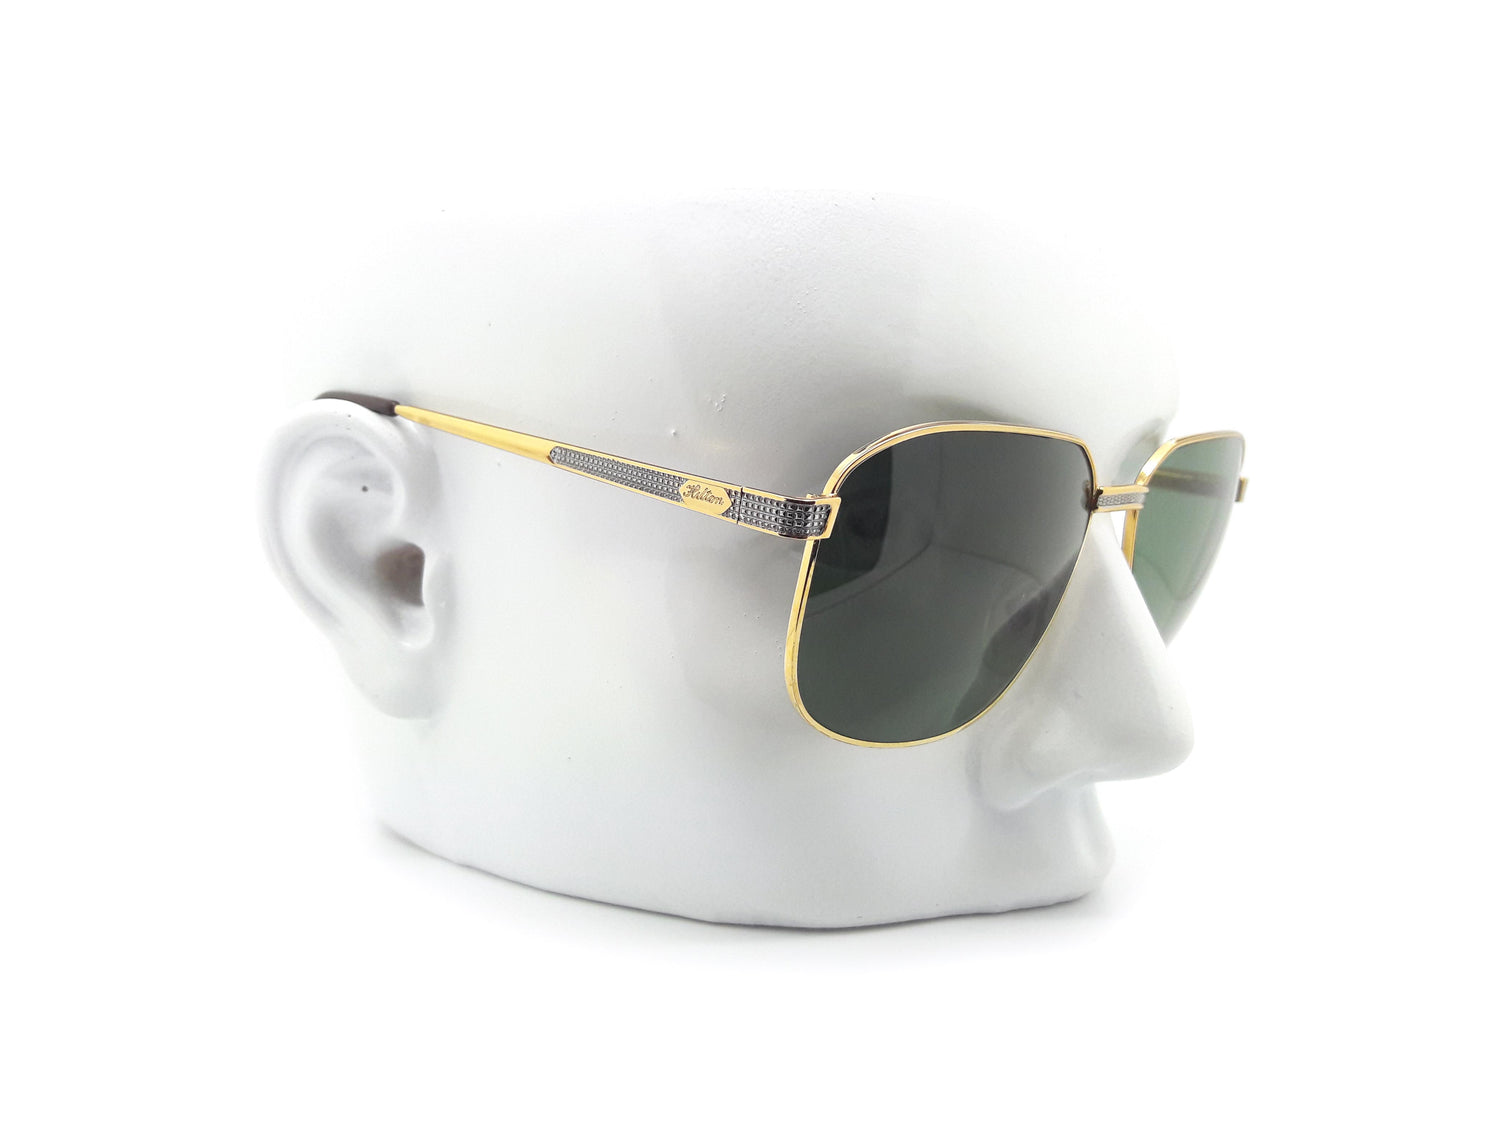 Hilton 638 1 Aviator Brown Lens Vintage Sunglasses : Kings of Past